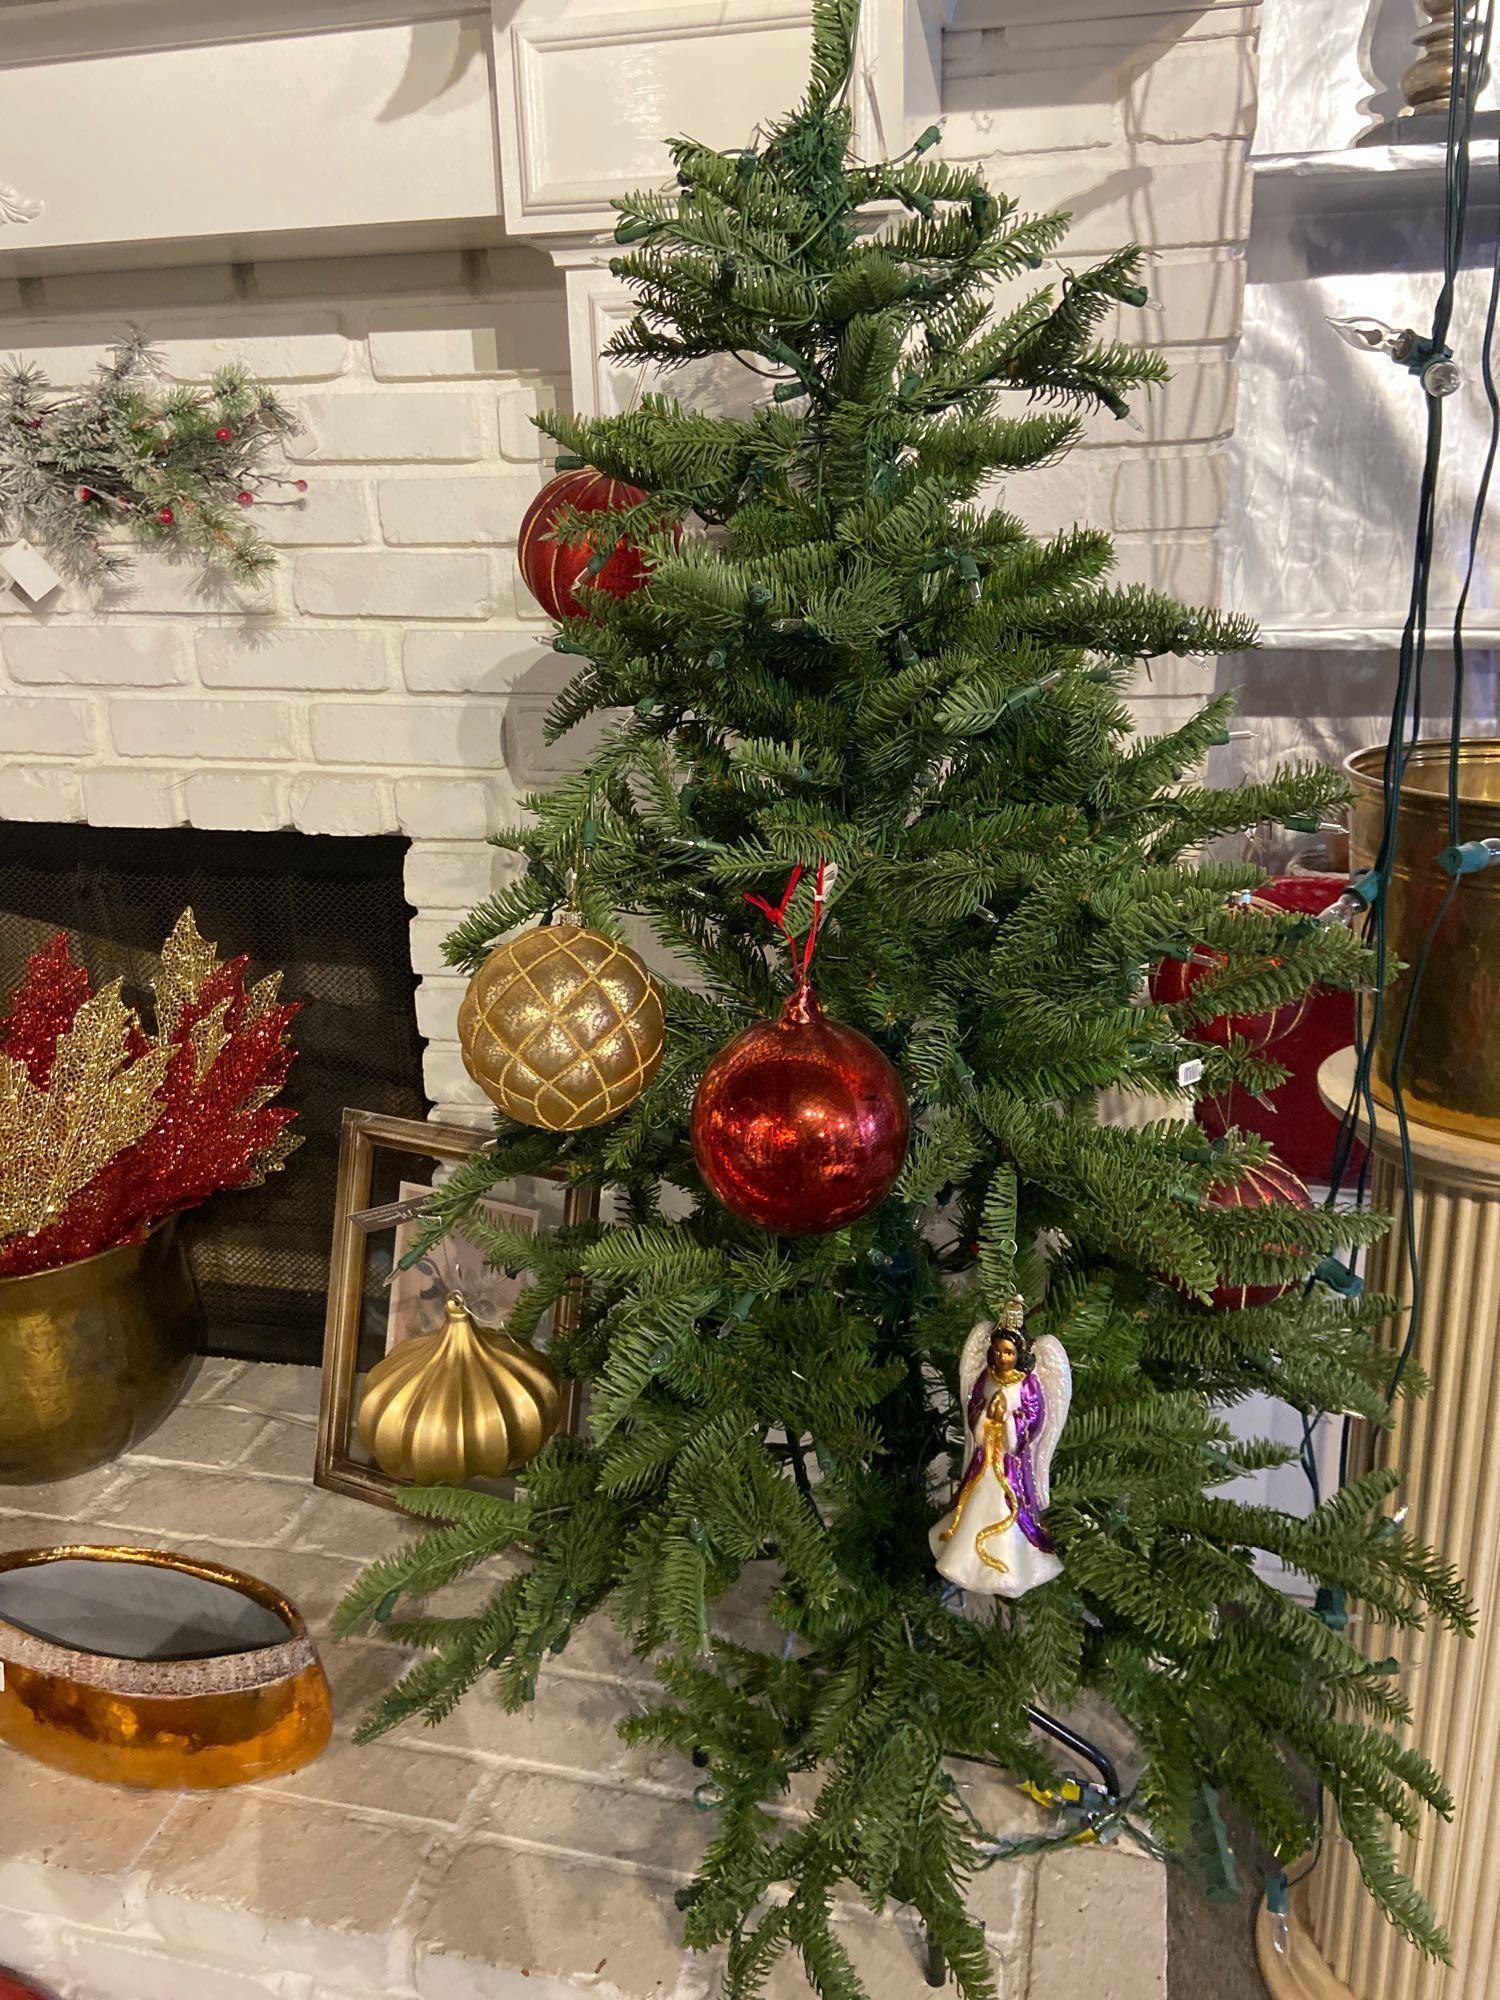 Contents mantle decor Christmas tree